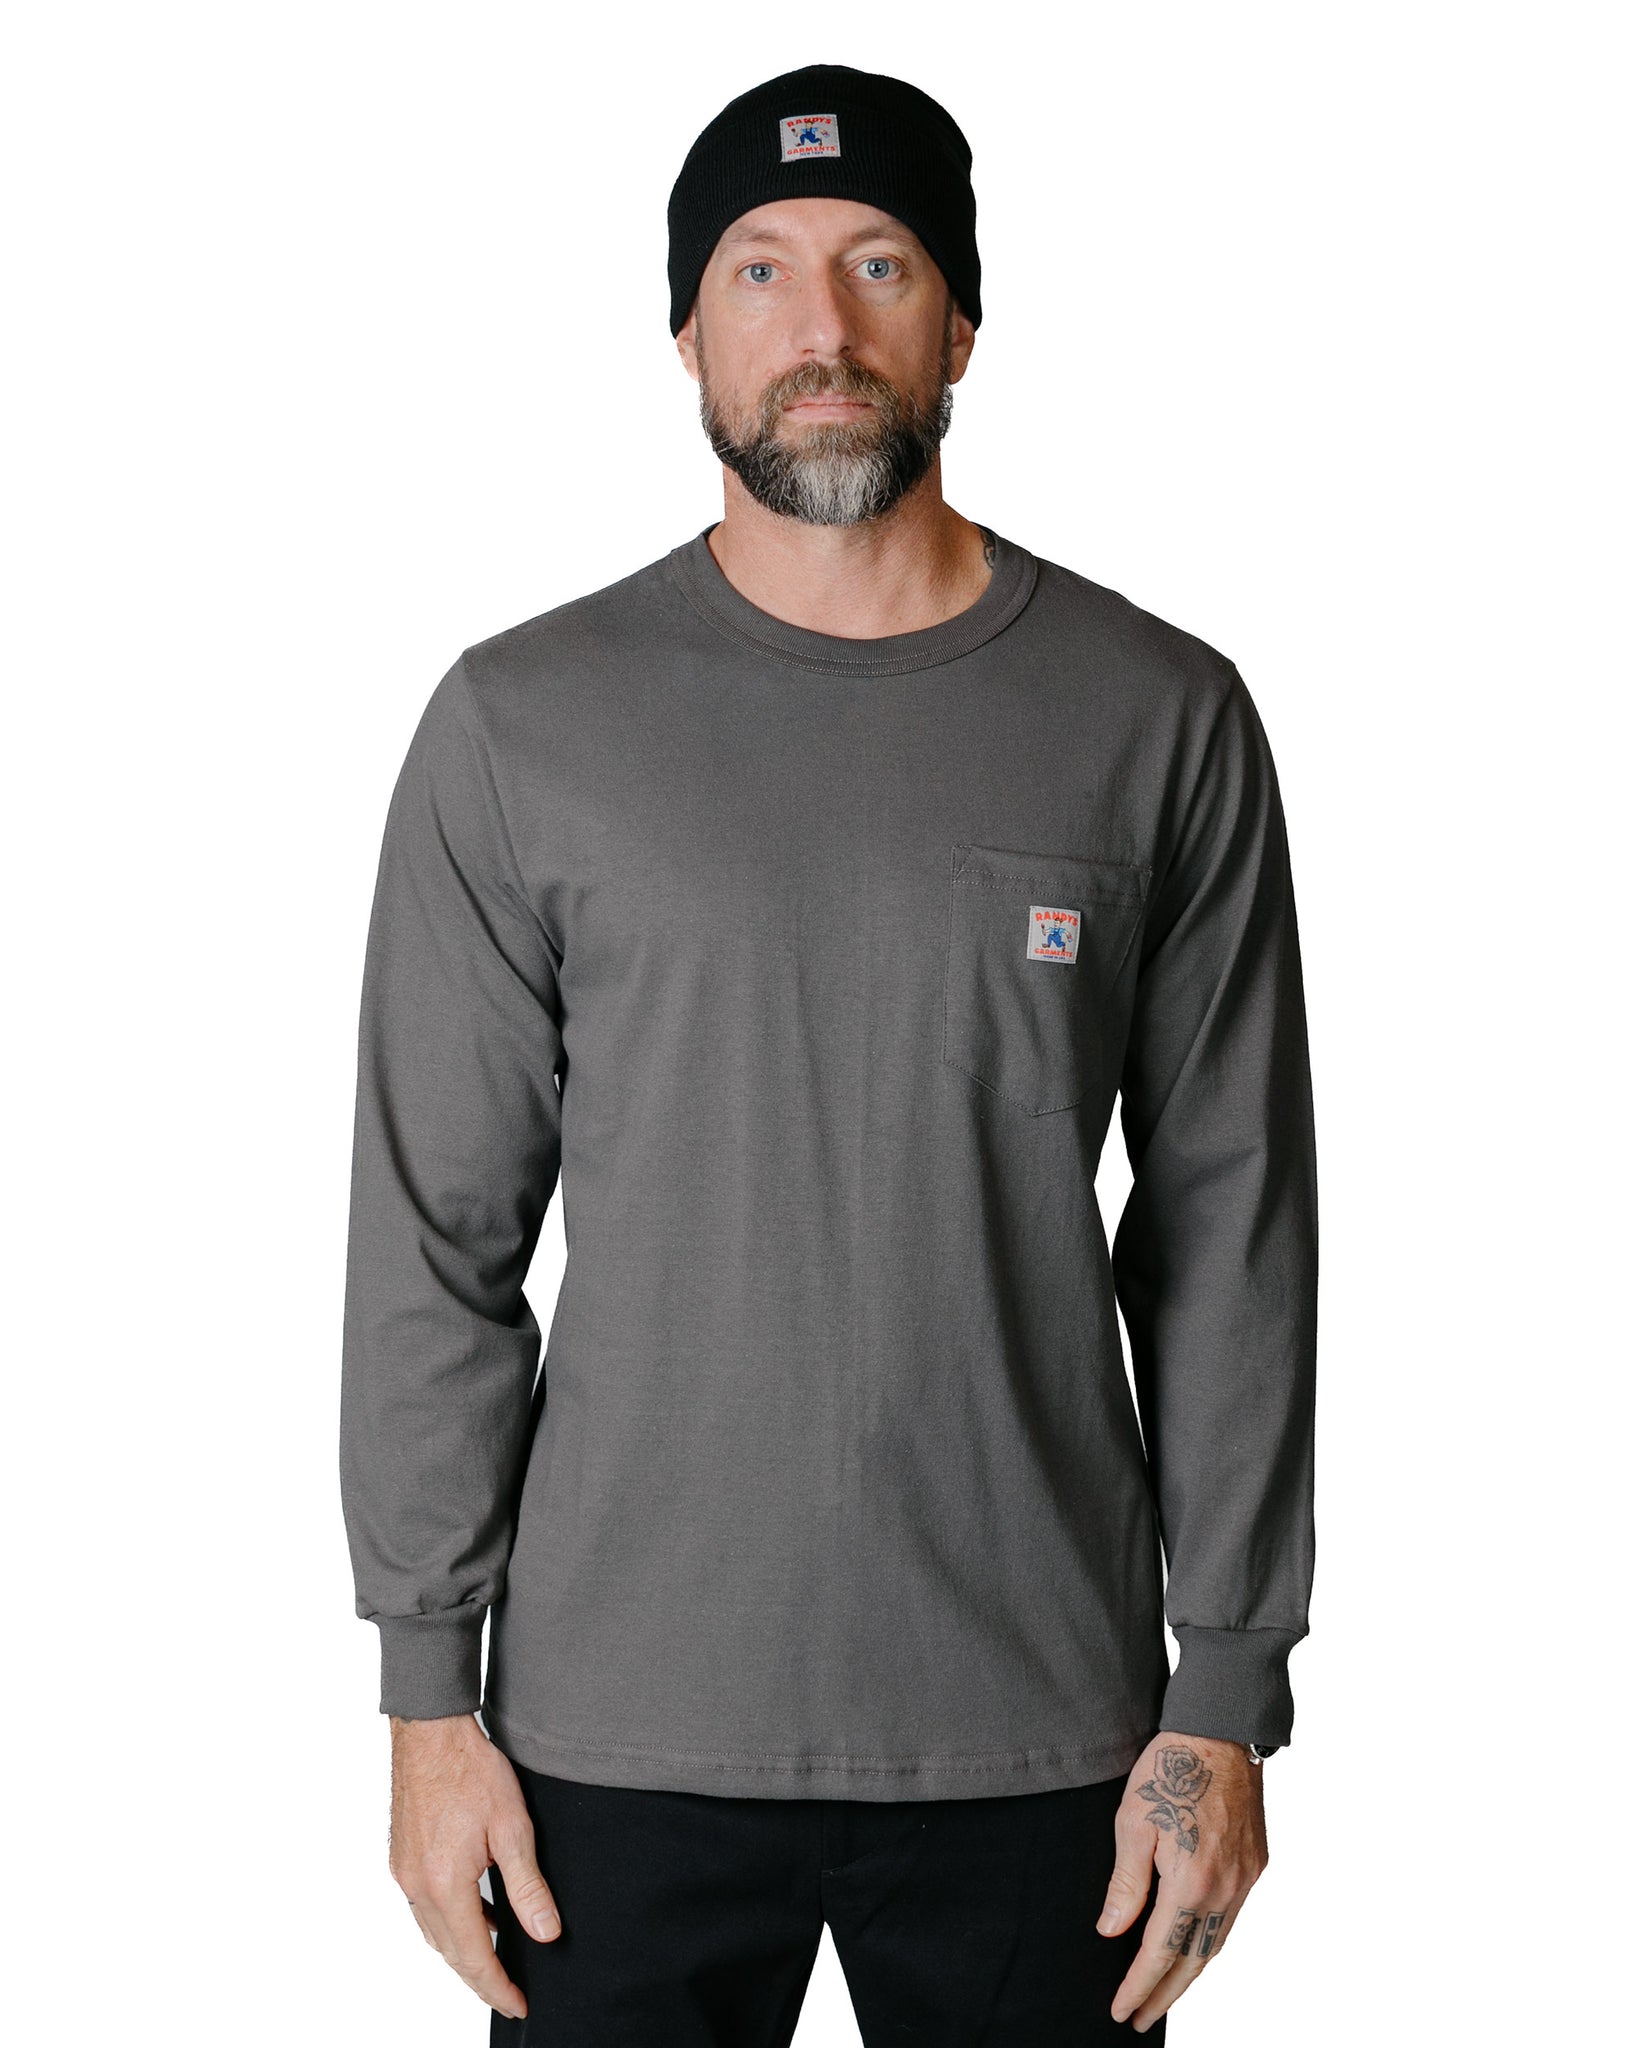 Randy's Garments Long-Sleeve Pocket Tee Grey model front